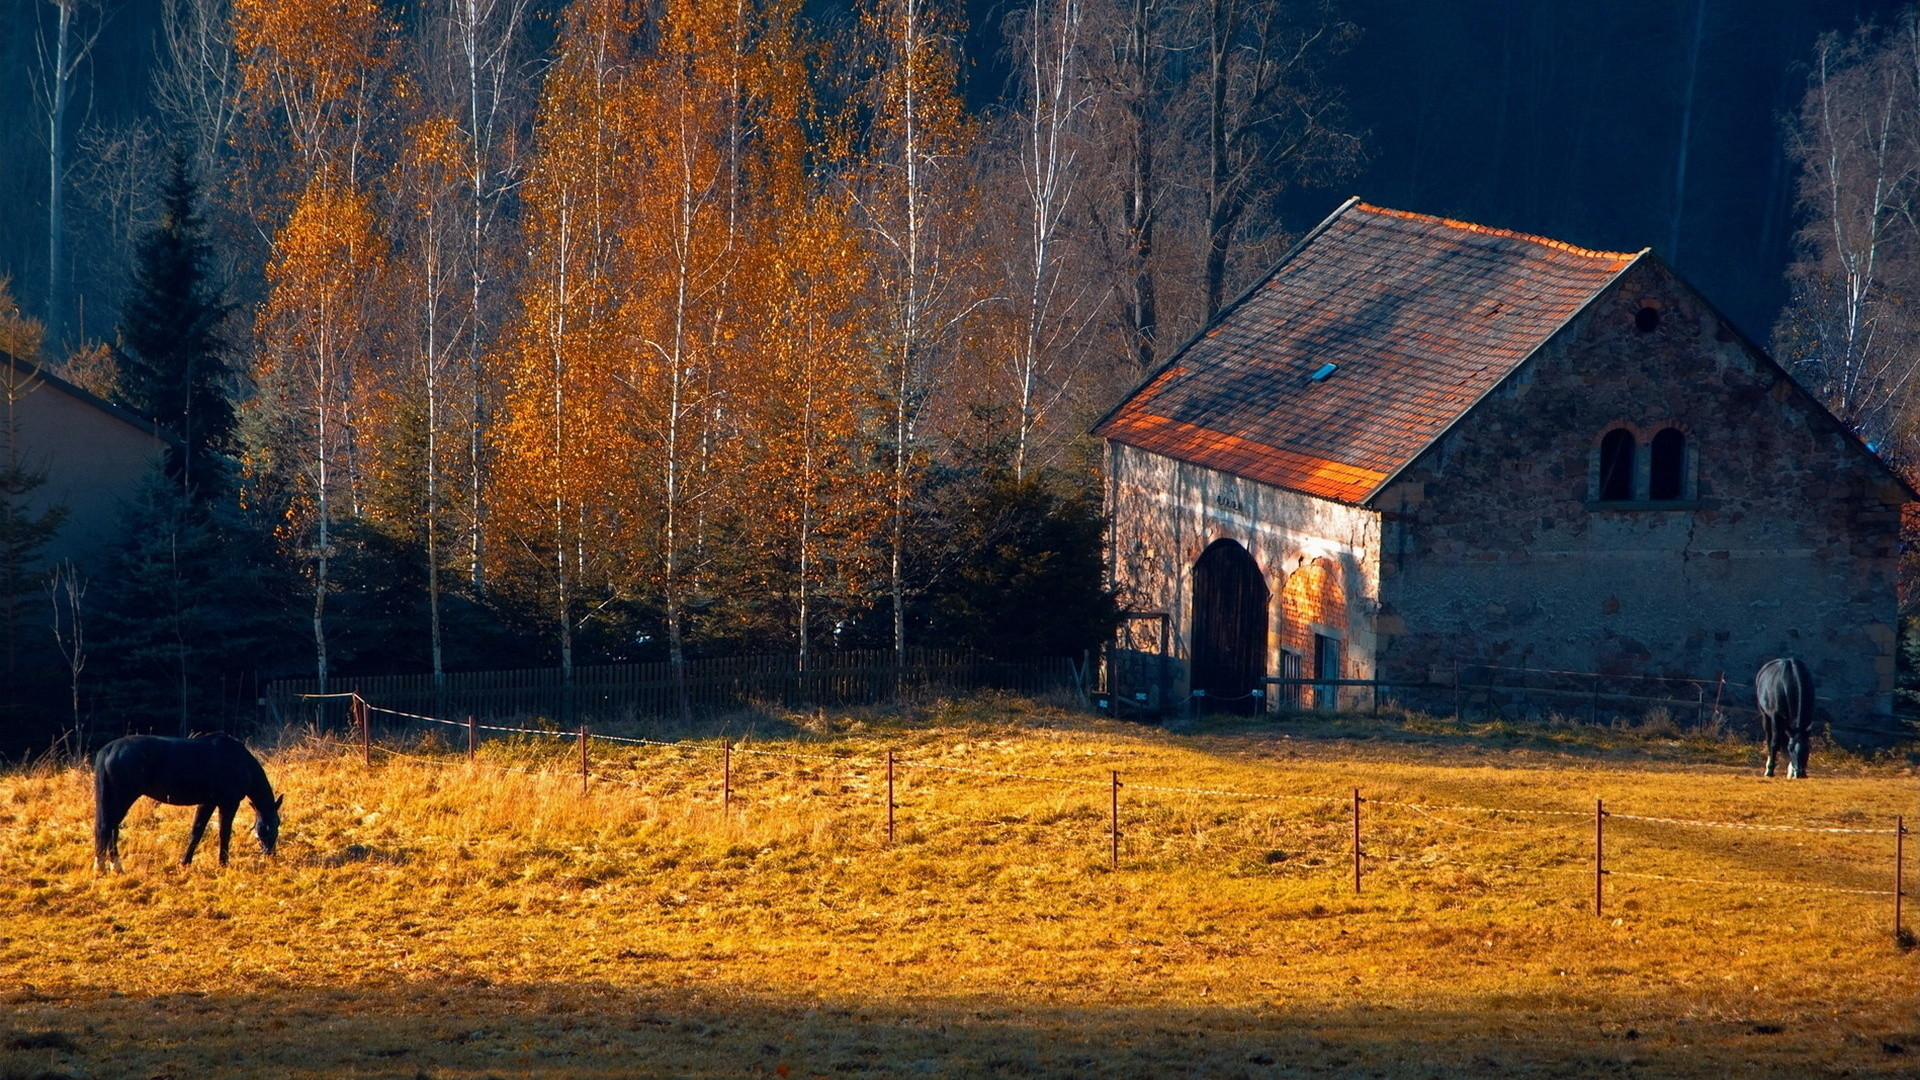 Horses rustic farm barn landscapes buildings autumn fall trees wallpaper